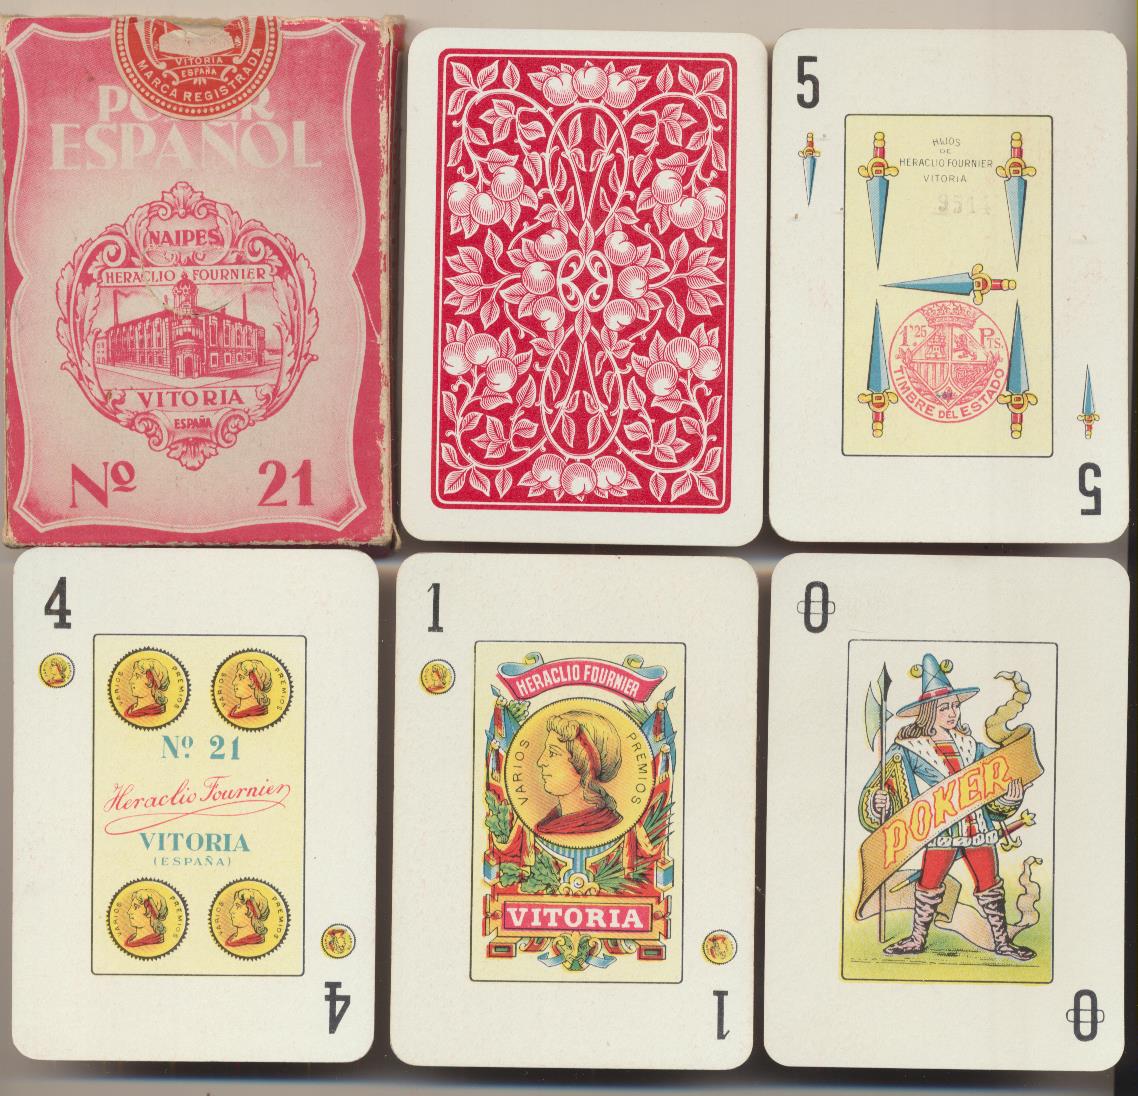 Baraja Póker Español. 40 cartas + comodín. Heraclio Fournier nº 21. Timbre del Estado 1,25